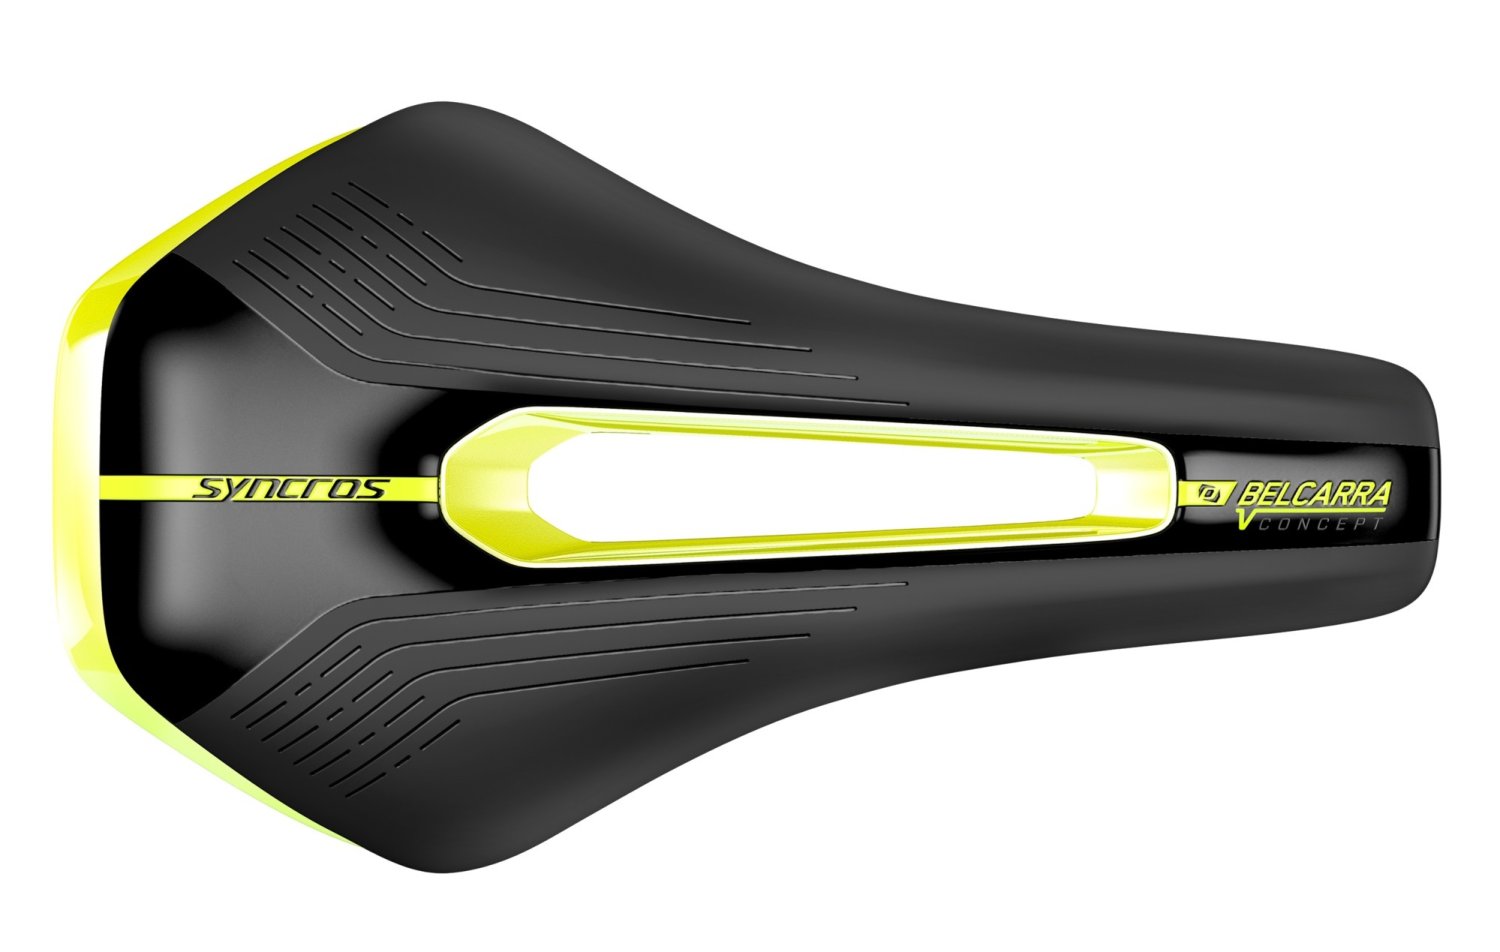 Седло велосипедное Syncros Belcarra V1.5 black/sulphur yellow, 270200-5024 флягодержатель велосипедный syncros carbon 1 0 black sulphur yellow карбоновый 241910 5024